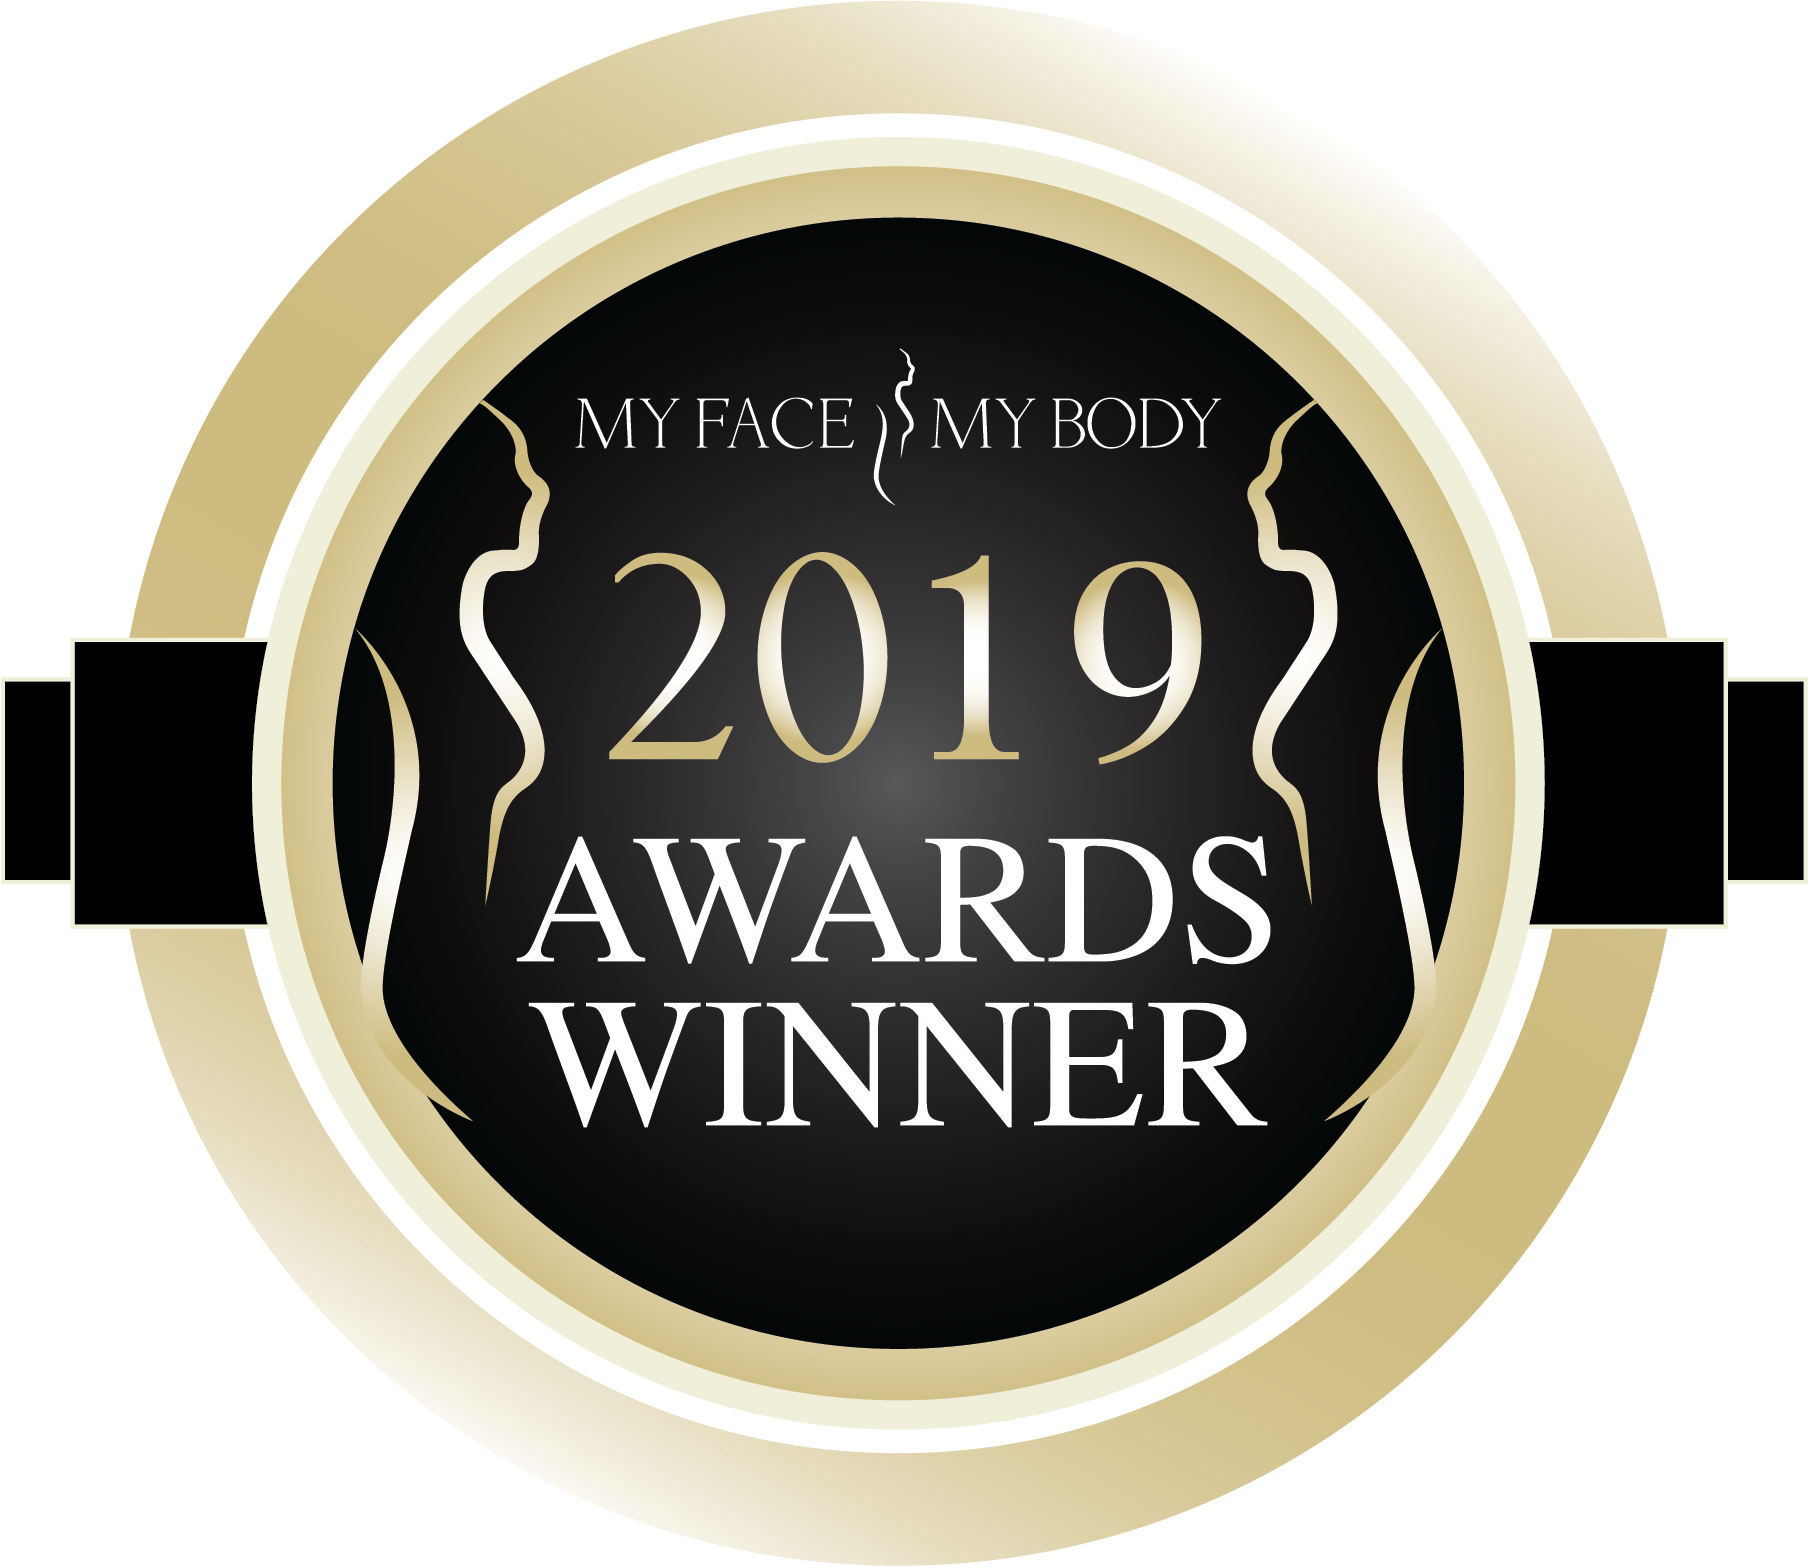 MyFaceMyBody Award Seal